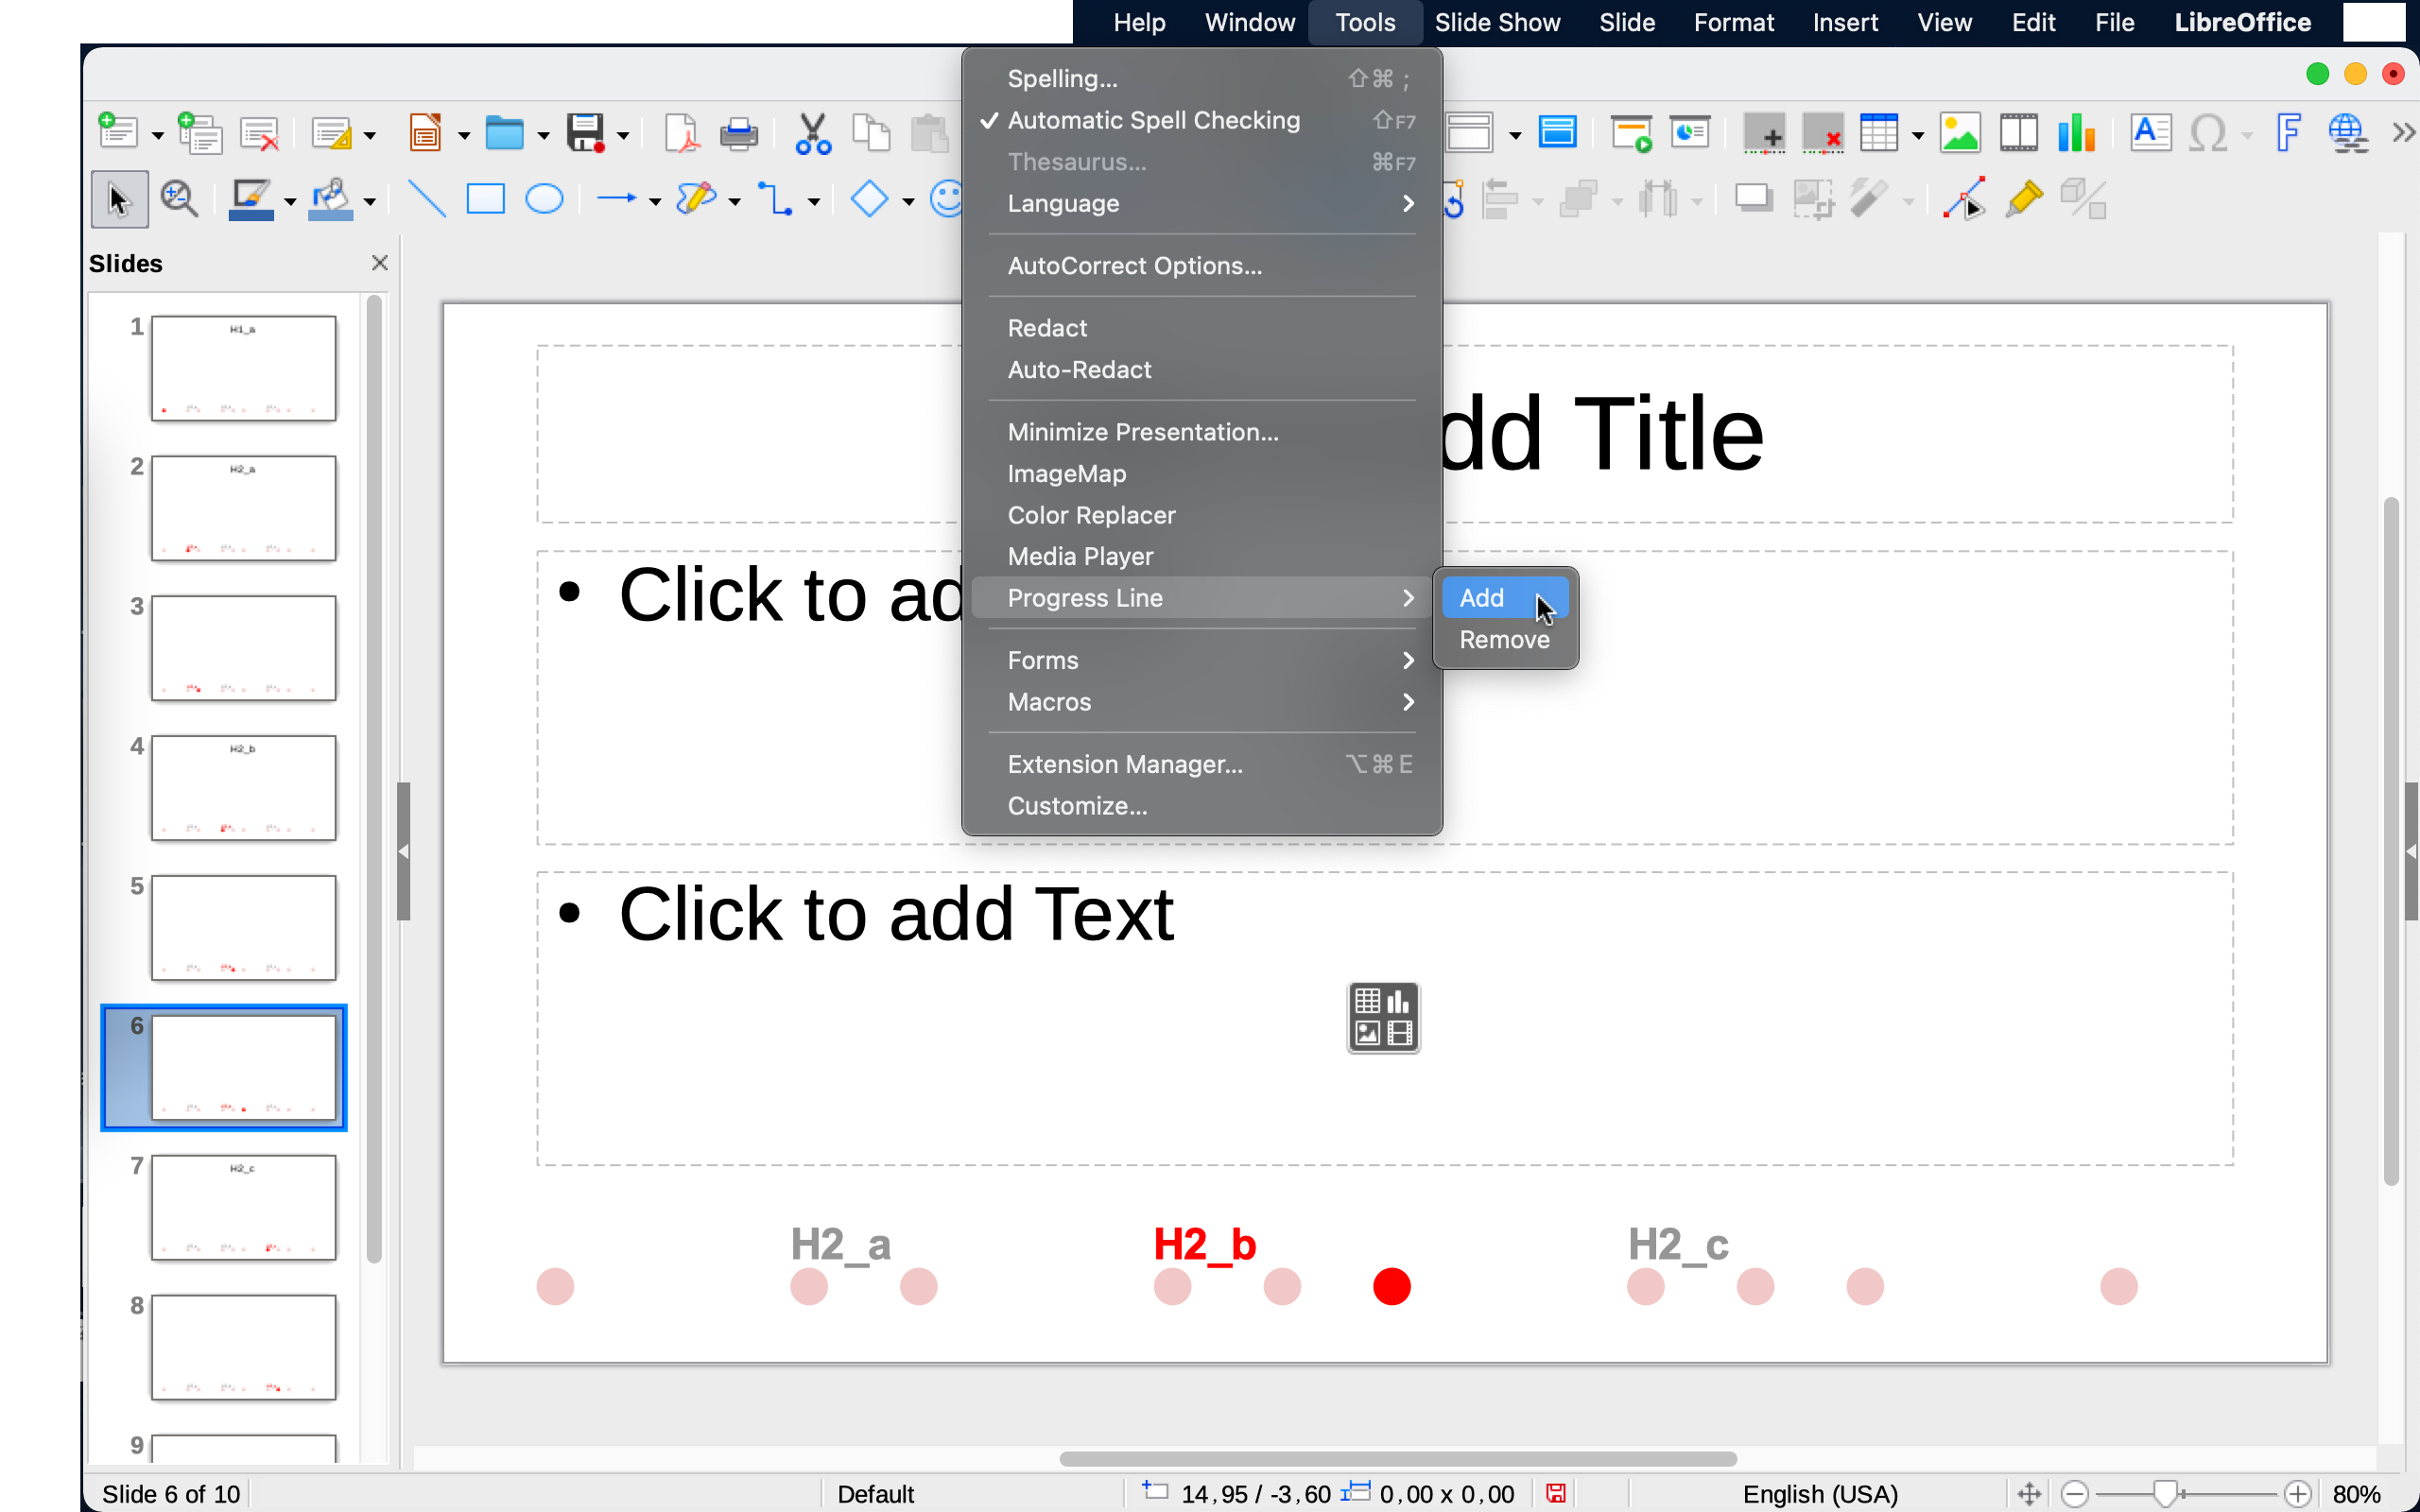 screenshot - tools submenu - Progress Line for LibreOffice/OpenOffice Impress Presentation